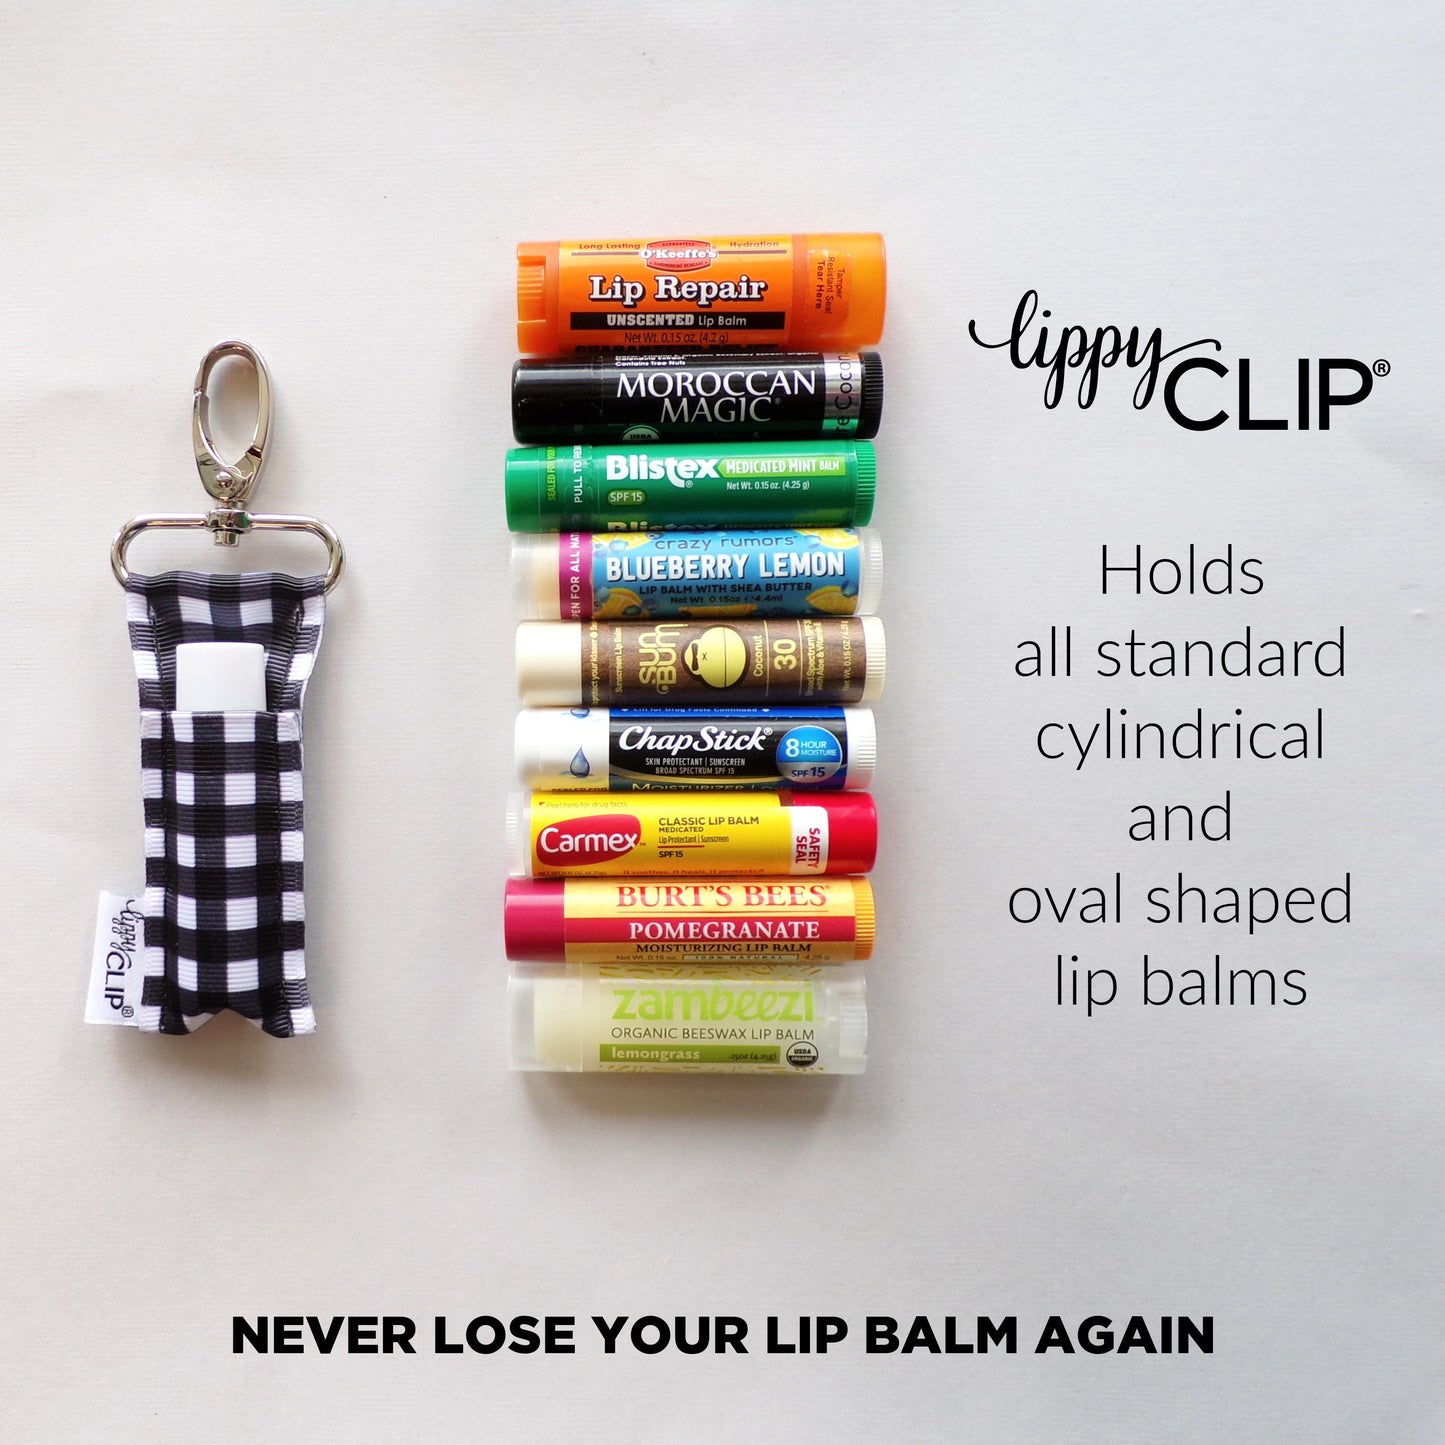 Trick or Treat LippyClip® Lip Balm Holder